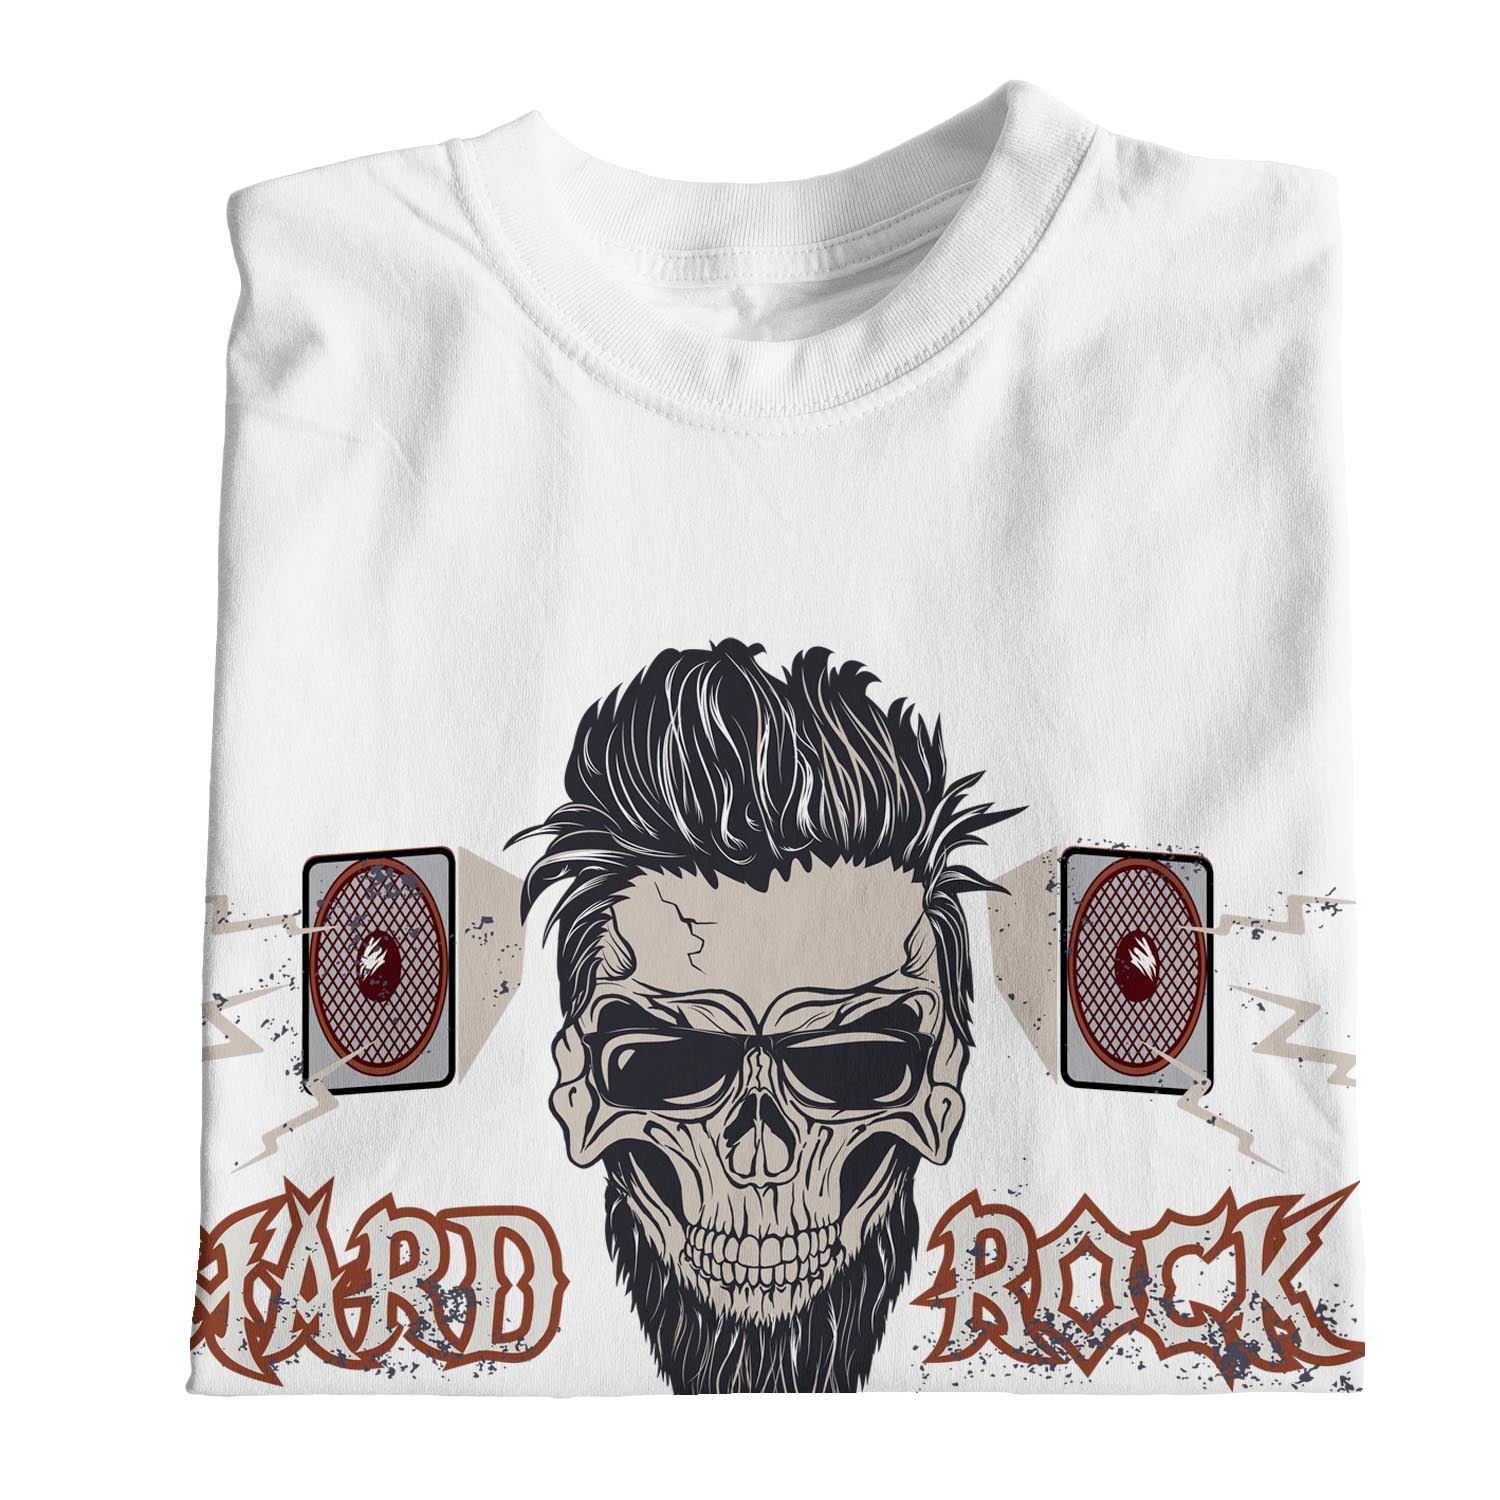 1Tee Mens Hard Rock Skull King of Music T-Shirt